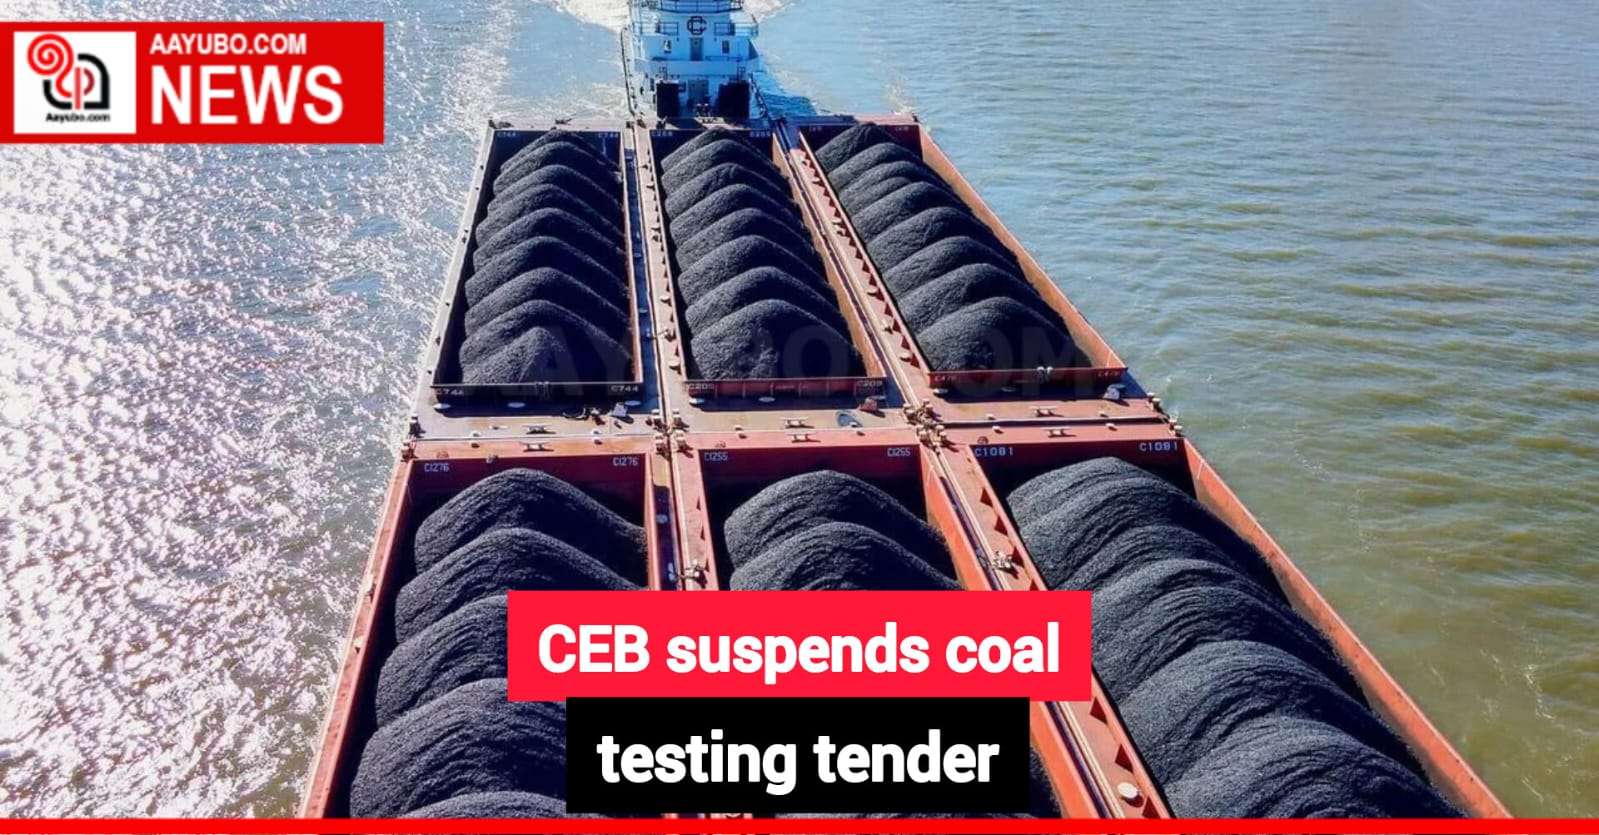 CEB suspends coal testing tender